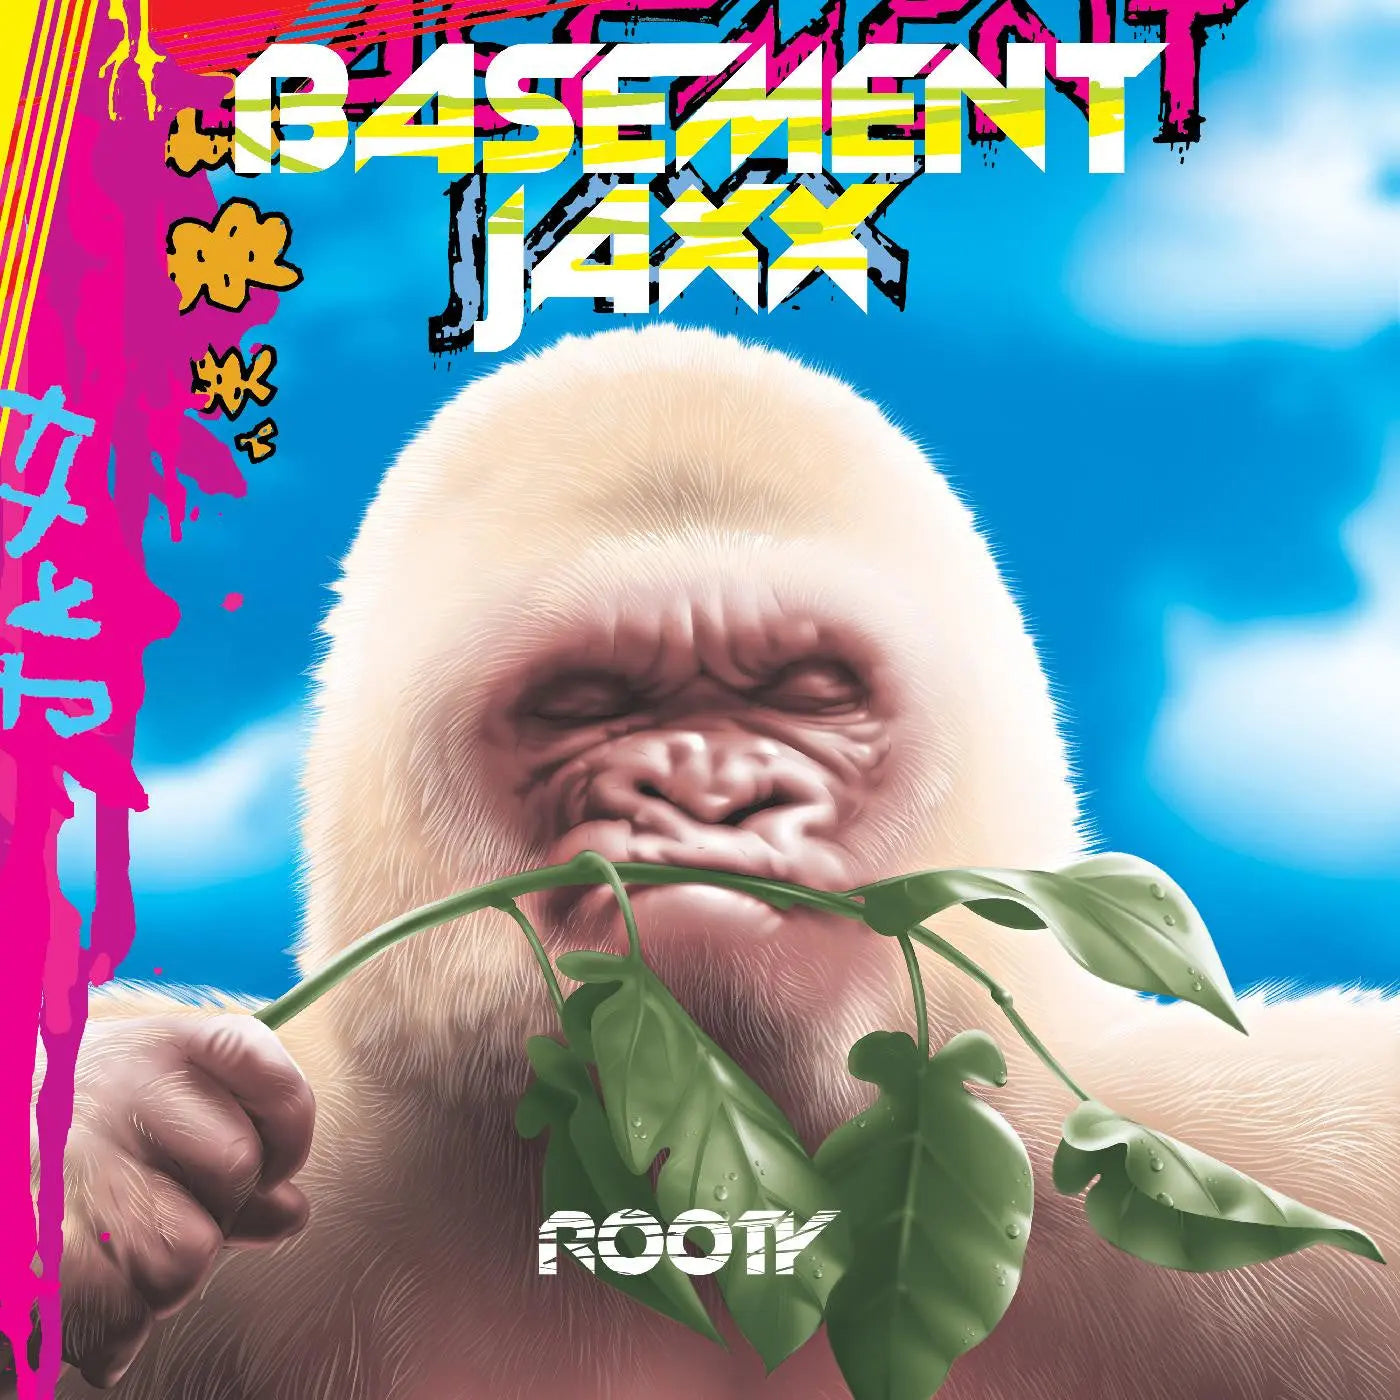 Basement Jaxx - Rooty (Colored, Pink & Blue Vinyl LP]